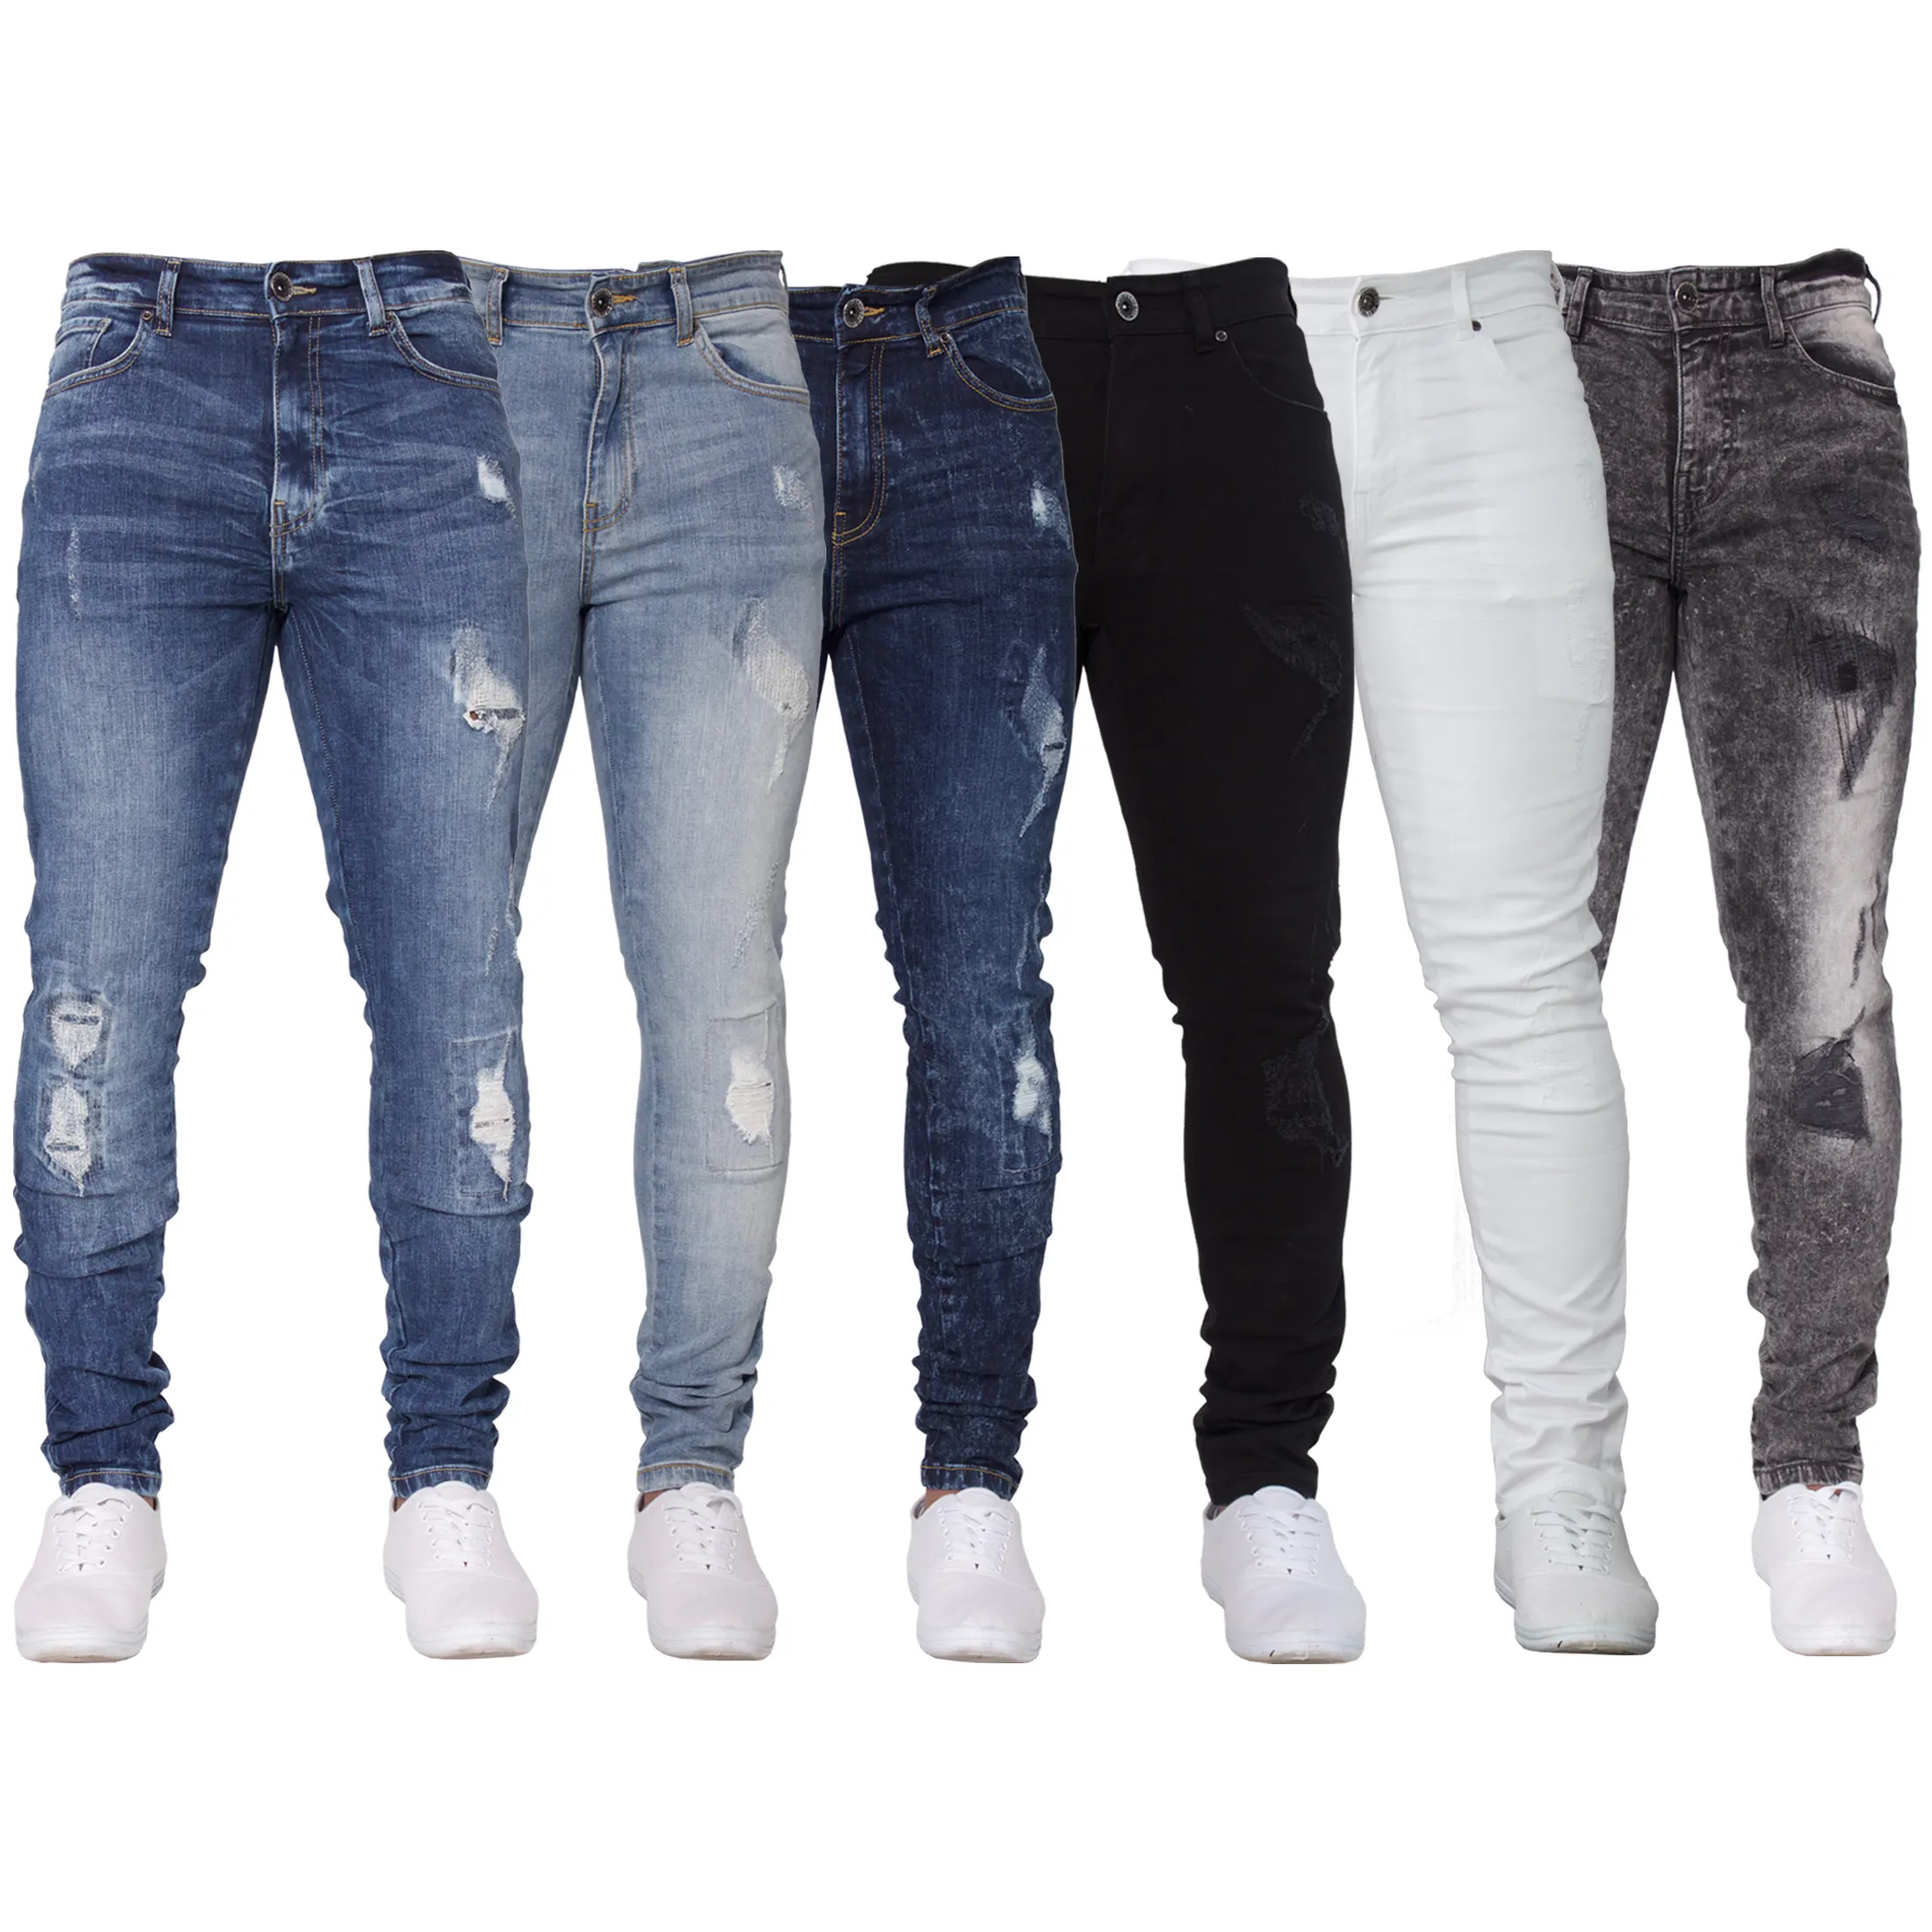 New jeans new jeans speed. Джинсы. Брюки - джинсы. Мужские джинсы. Denim джинсы.